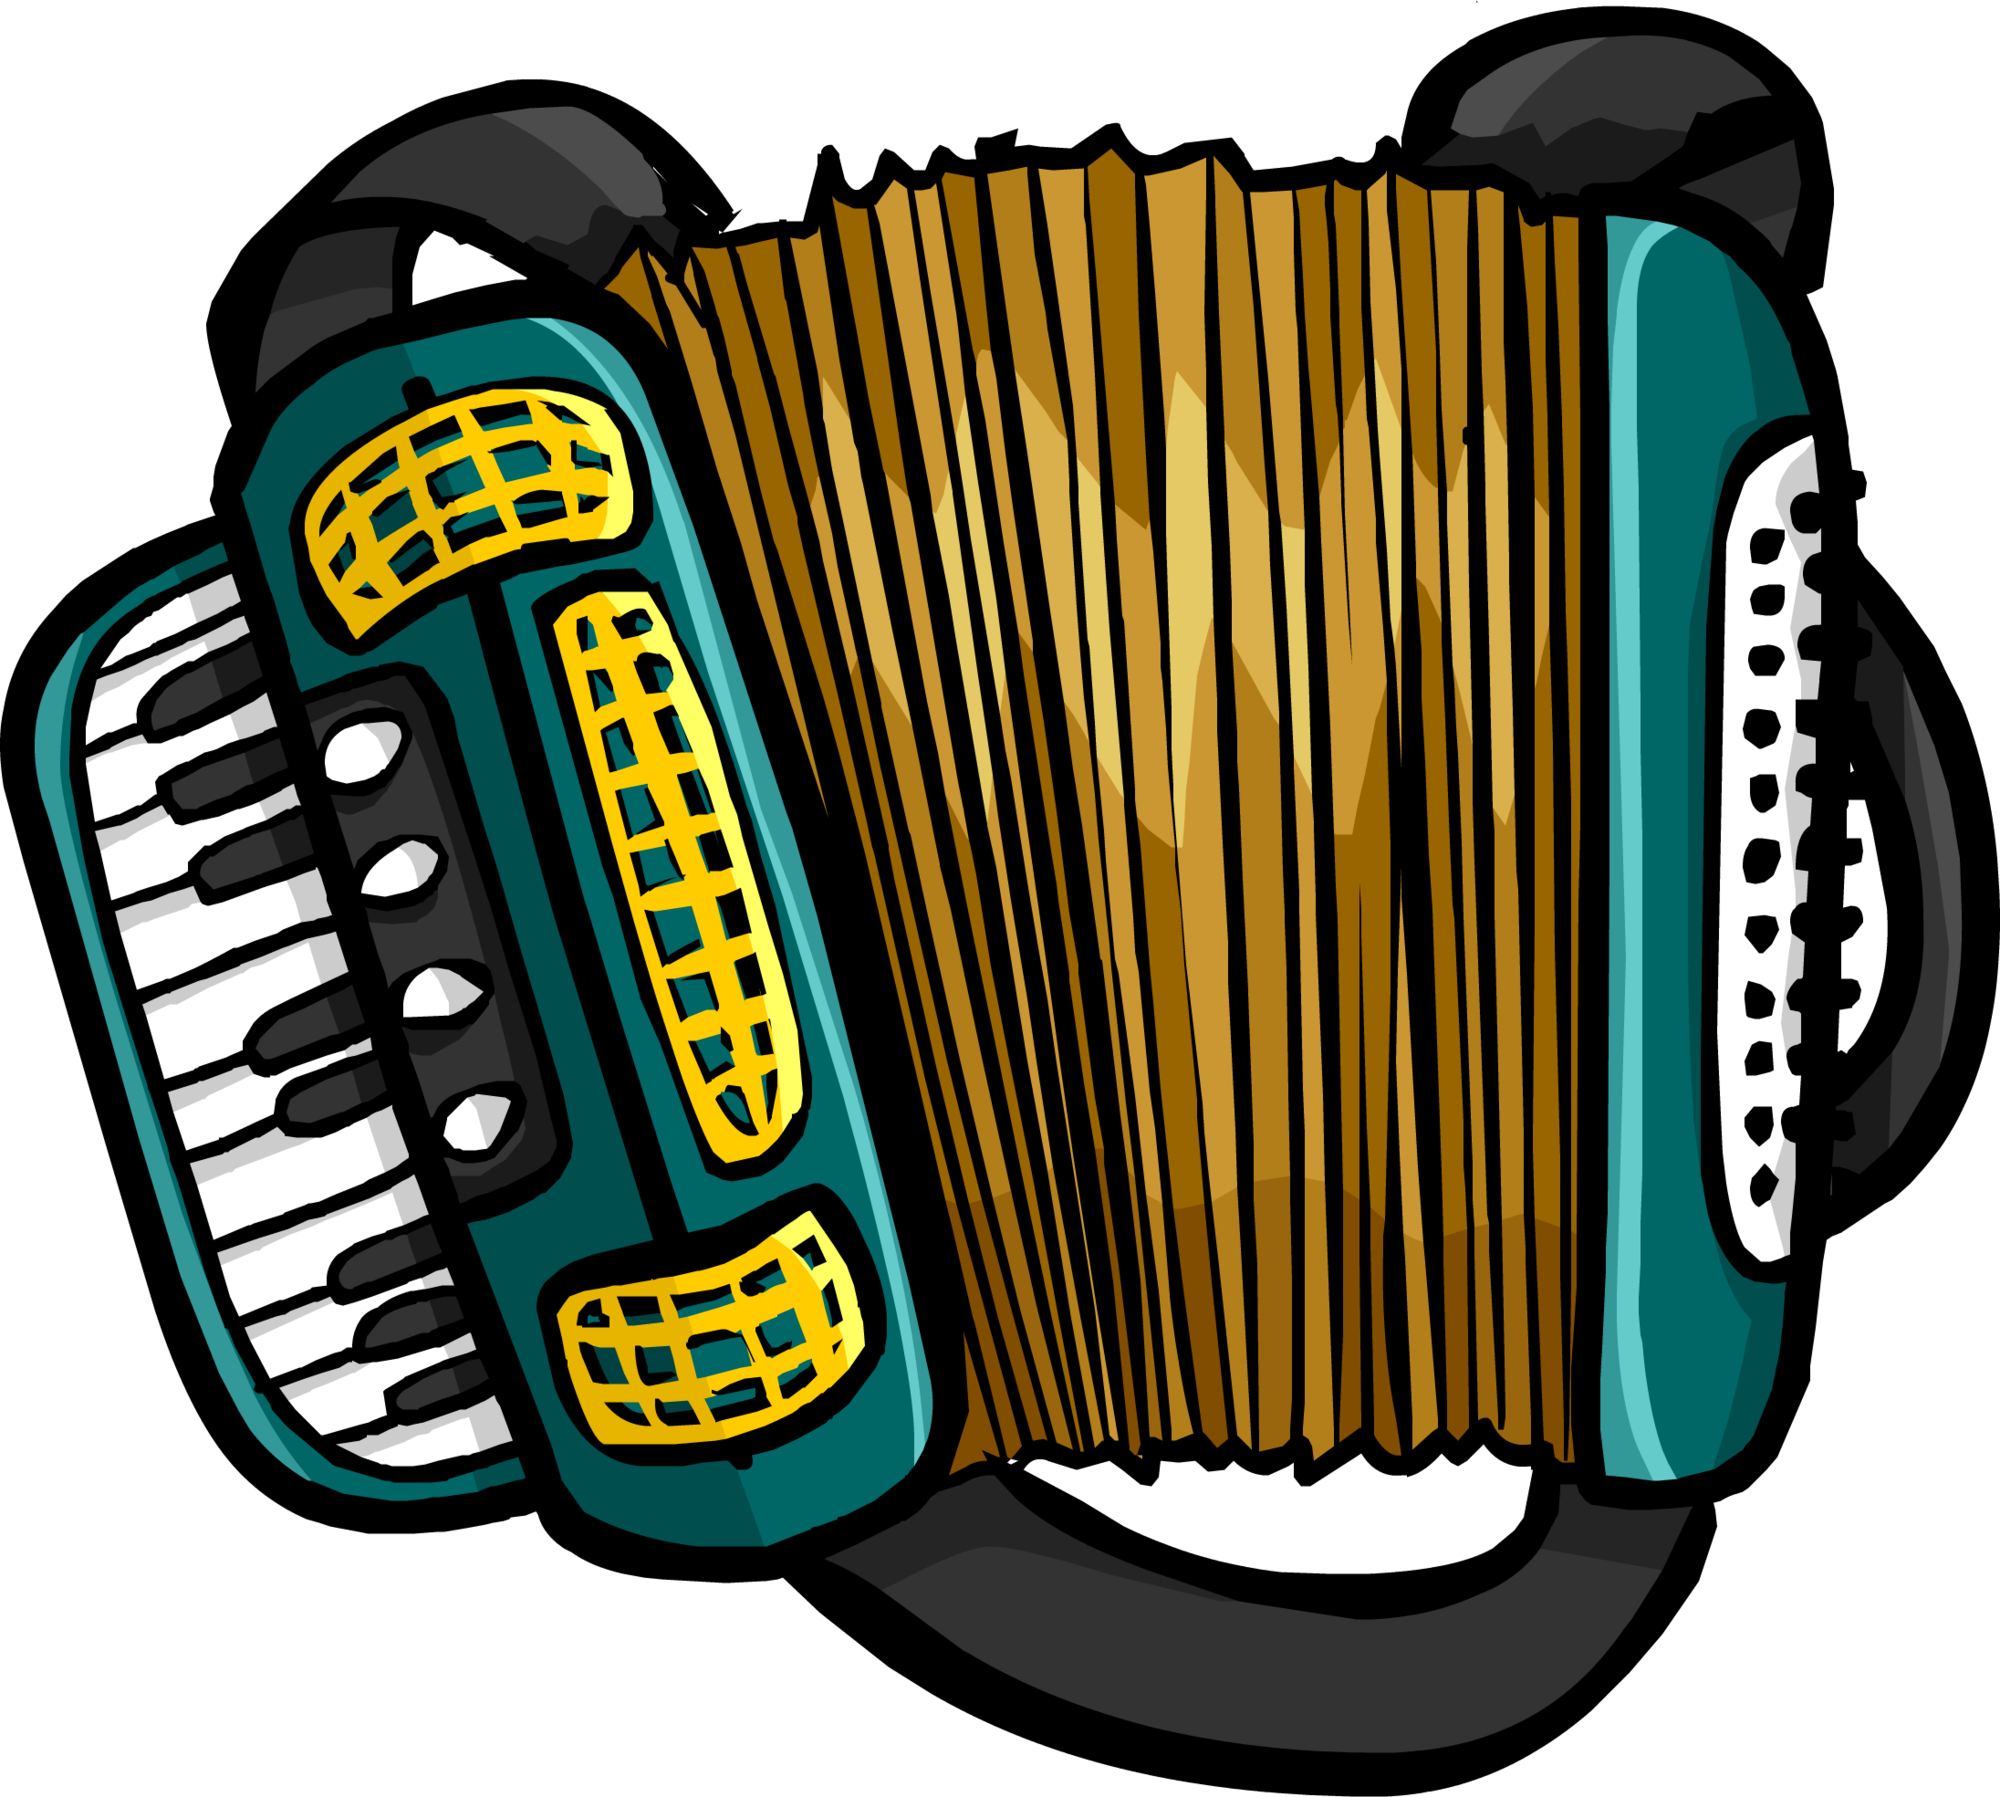 Векторный аккордеон PNG Image